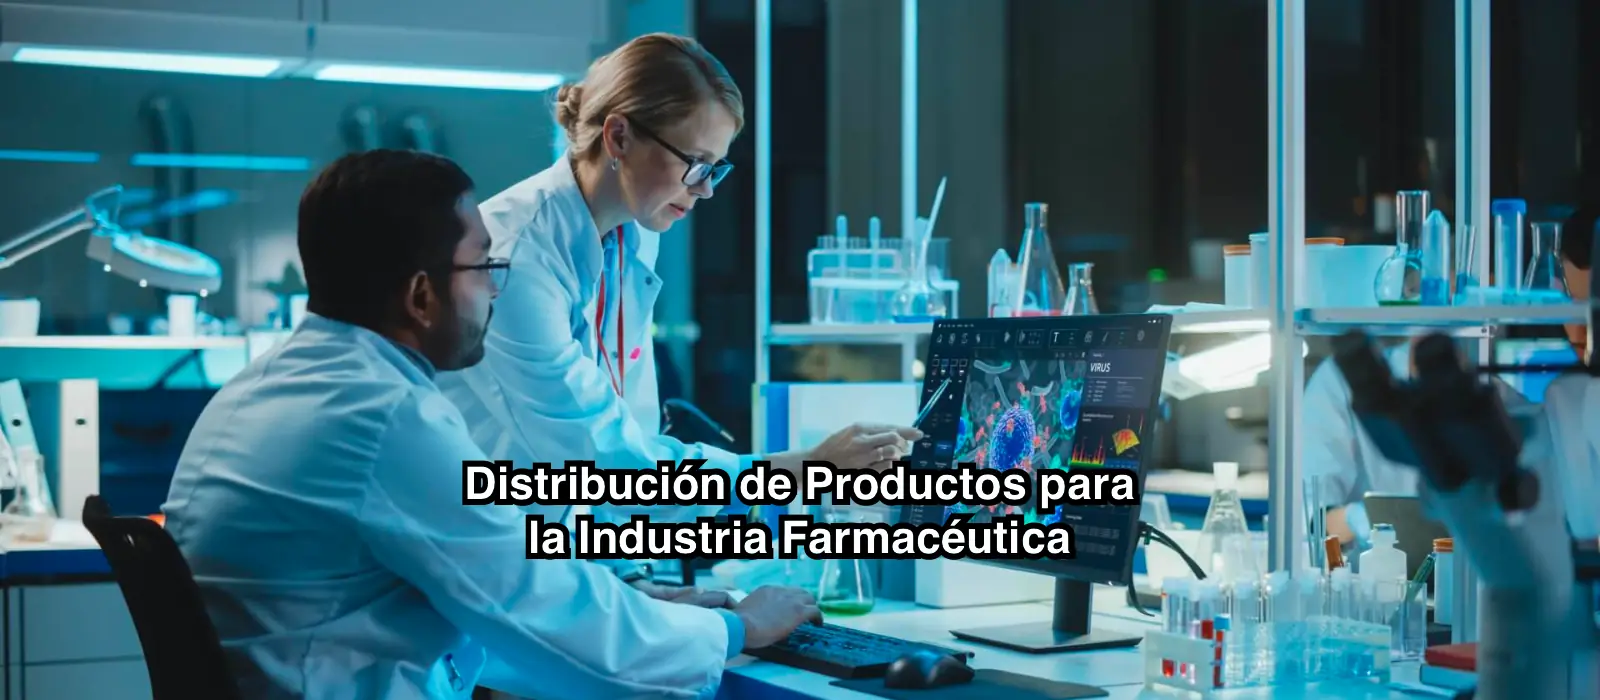 Distribución de Productos para empresas farmaceuticas